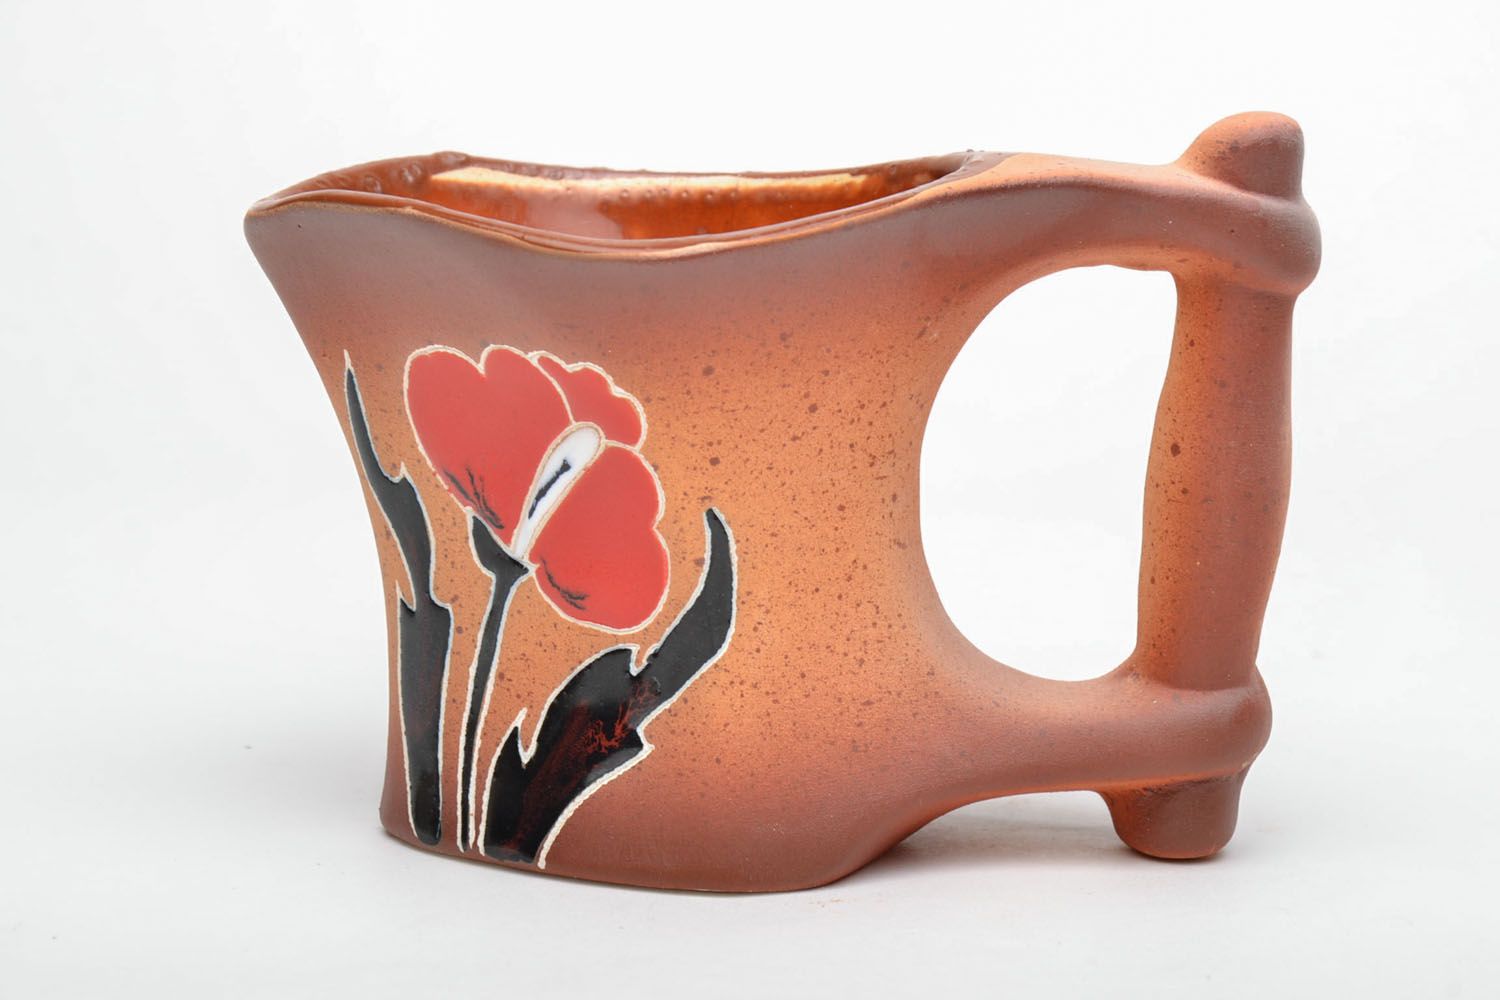 Medium size 8 oz clay glazed decorative ceramic mug with red hot poppies pattern photo 2